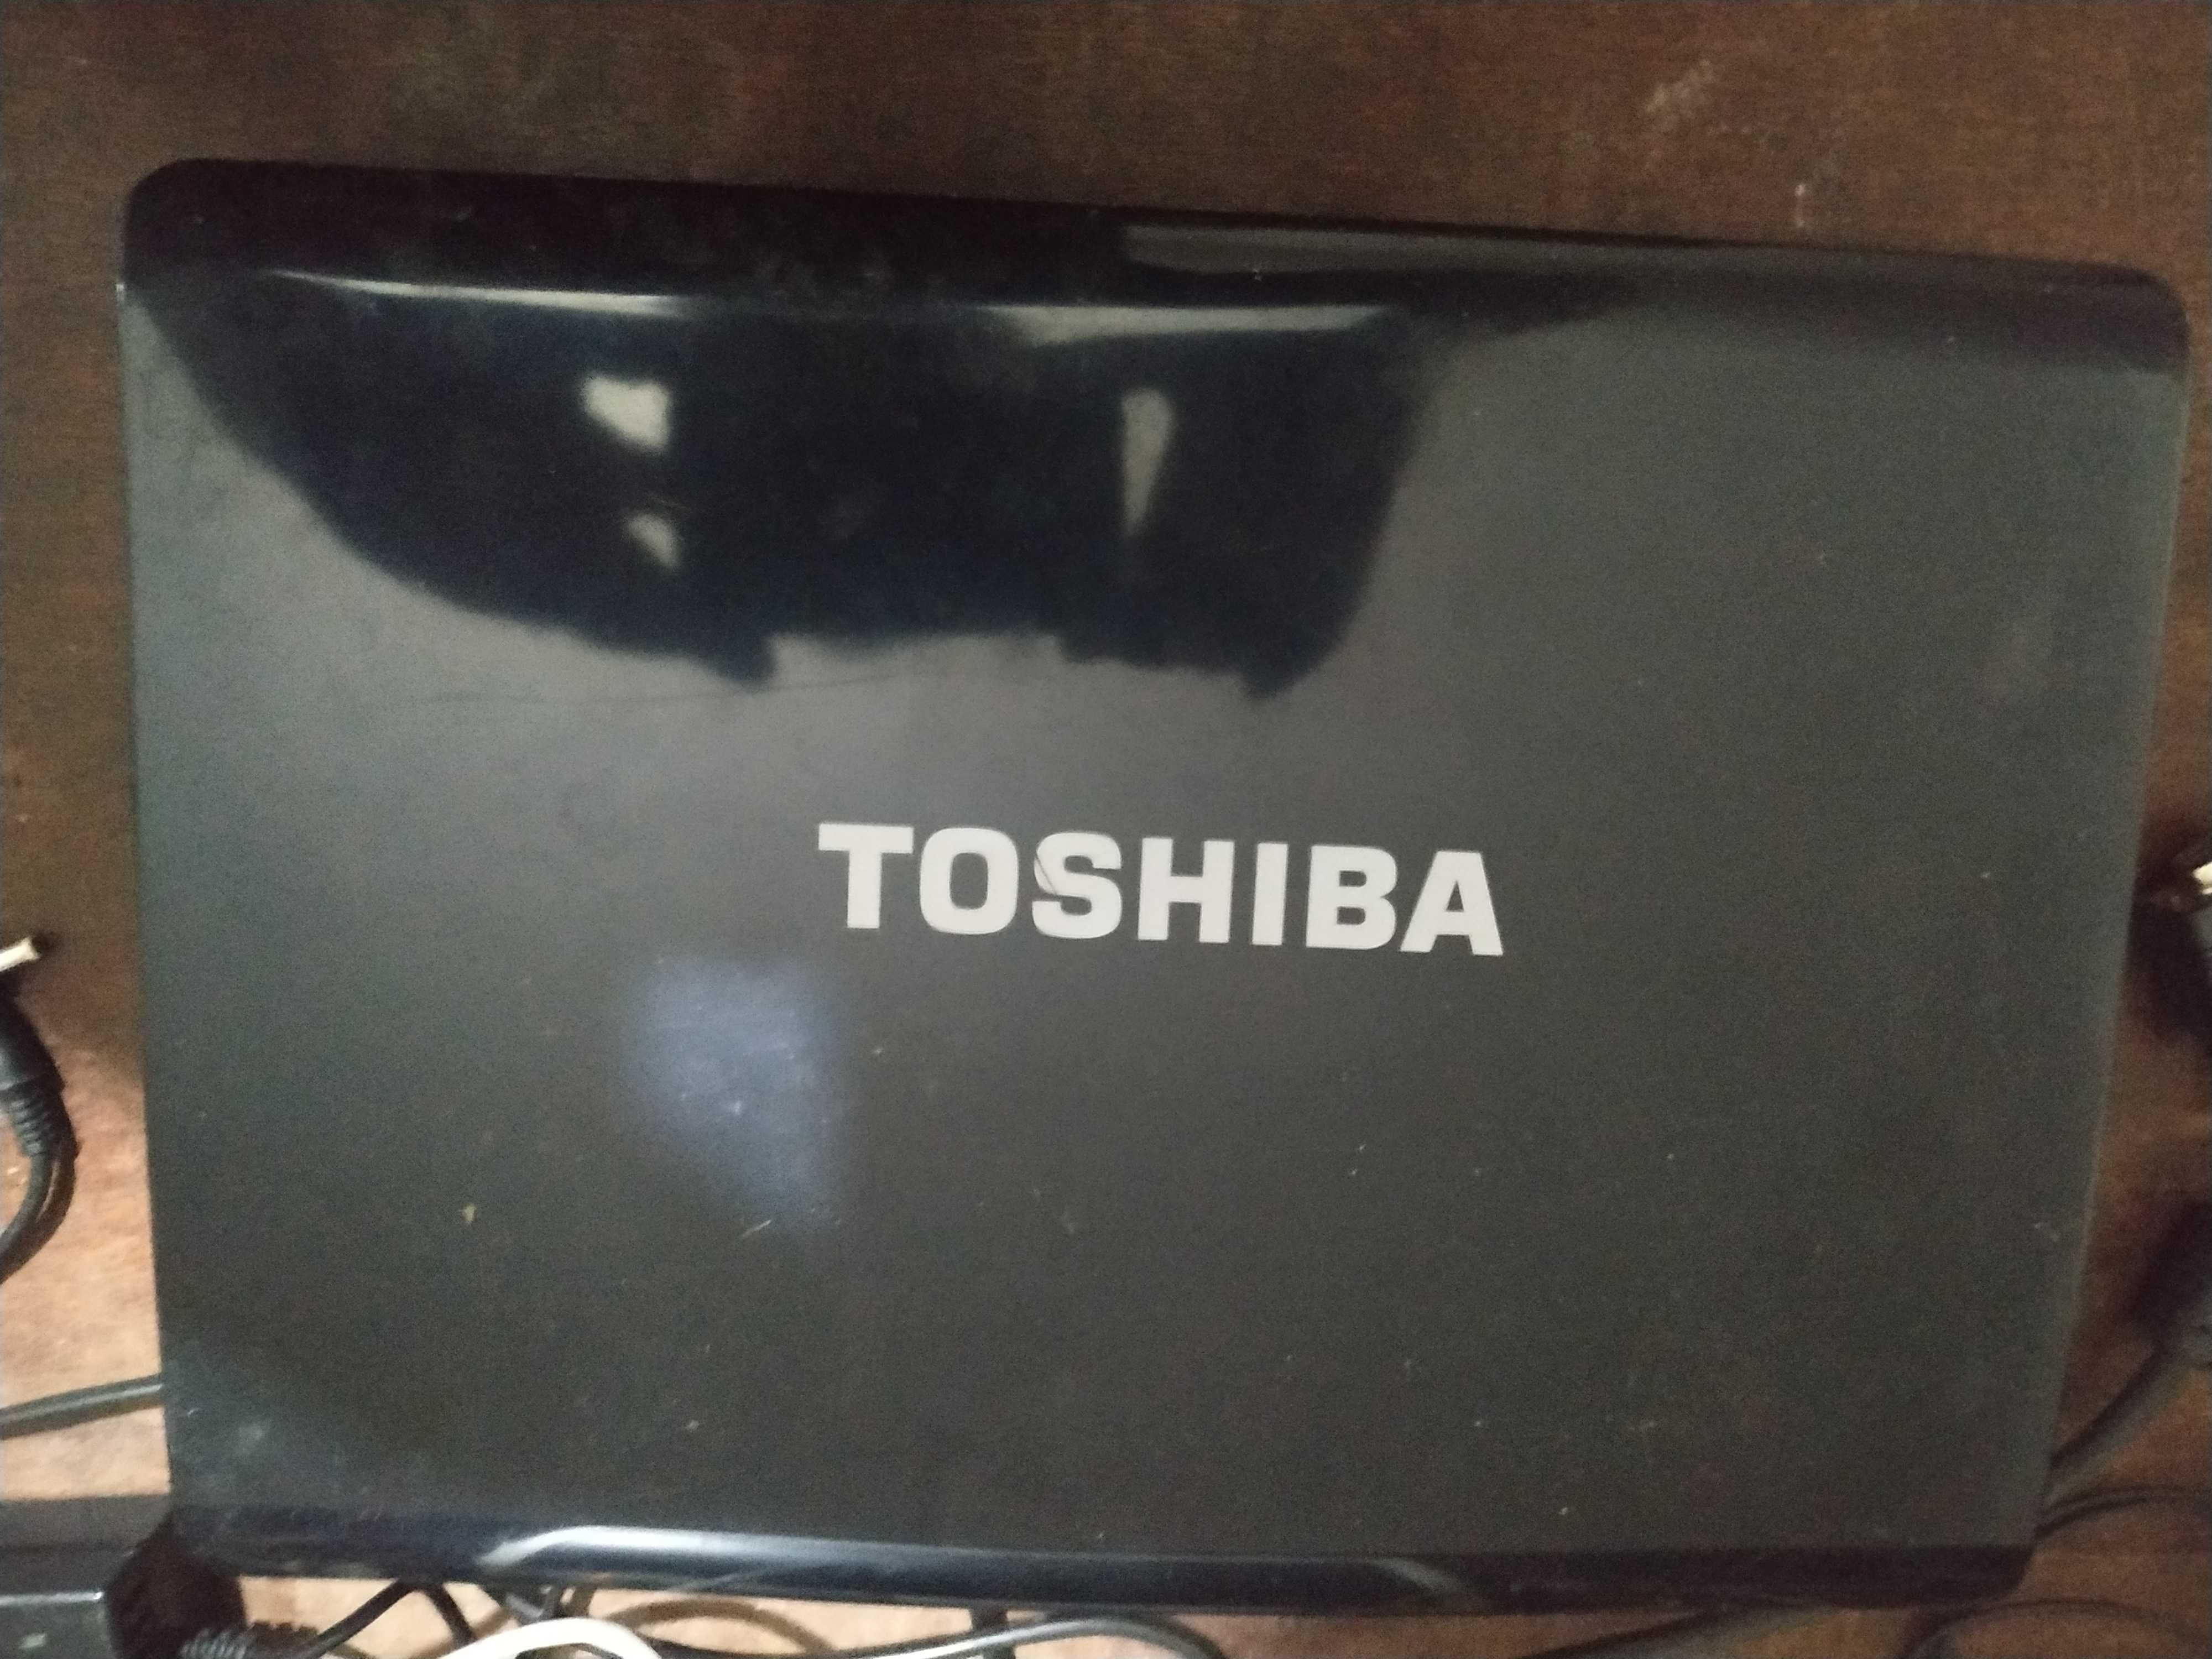 Toshiba A200 - 2C5